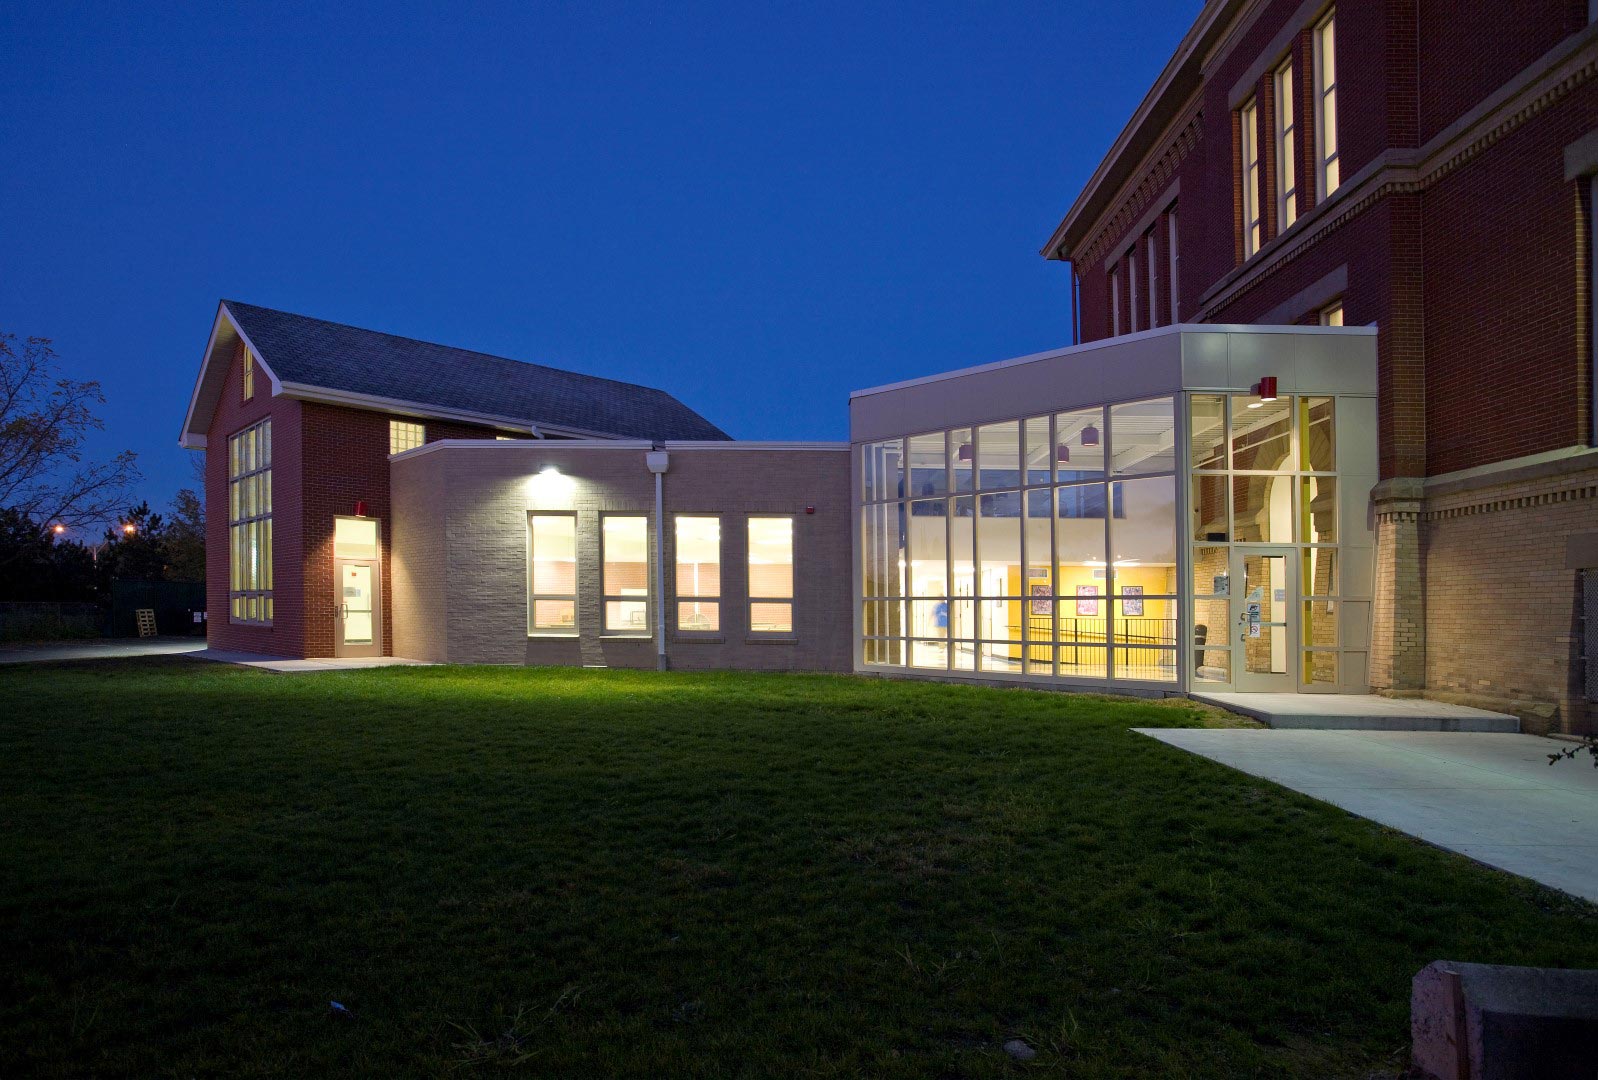 Ohio Avenue Elementary School, Exterior of new entrance lobby at night